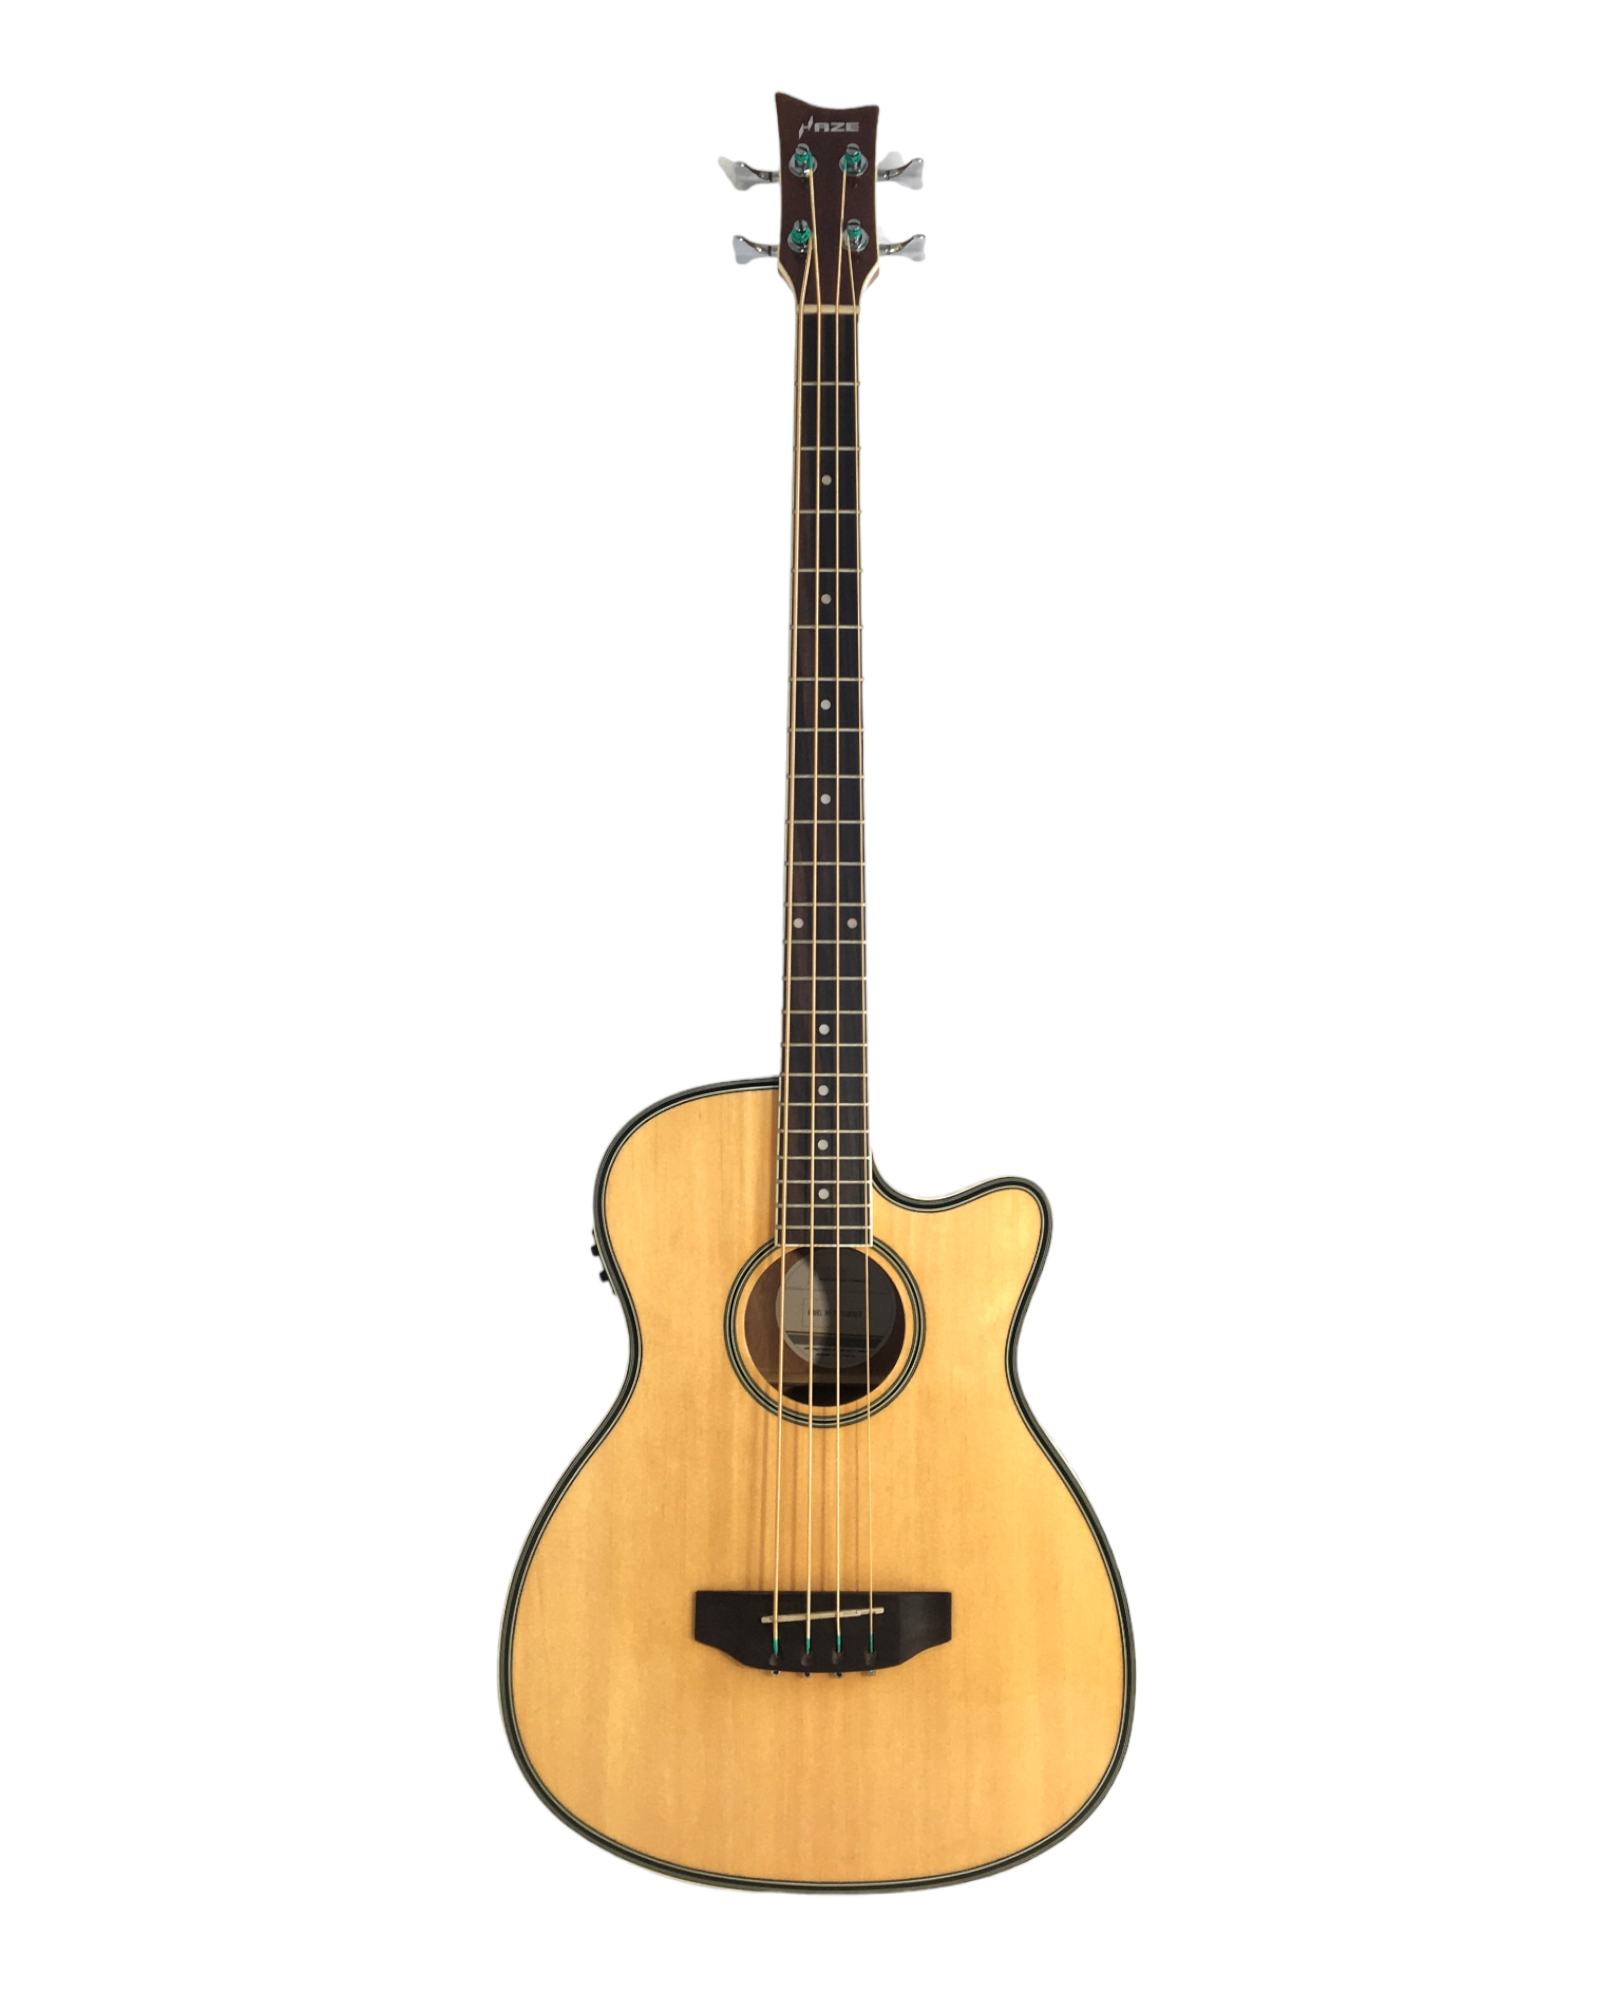 Haze 631BCEQ/MS Thin-Body Acoustic Guitar, Built-in EQ, Cutaway +